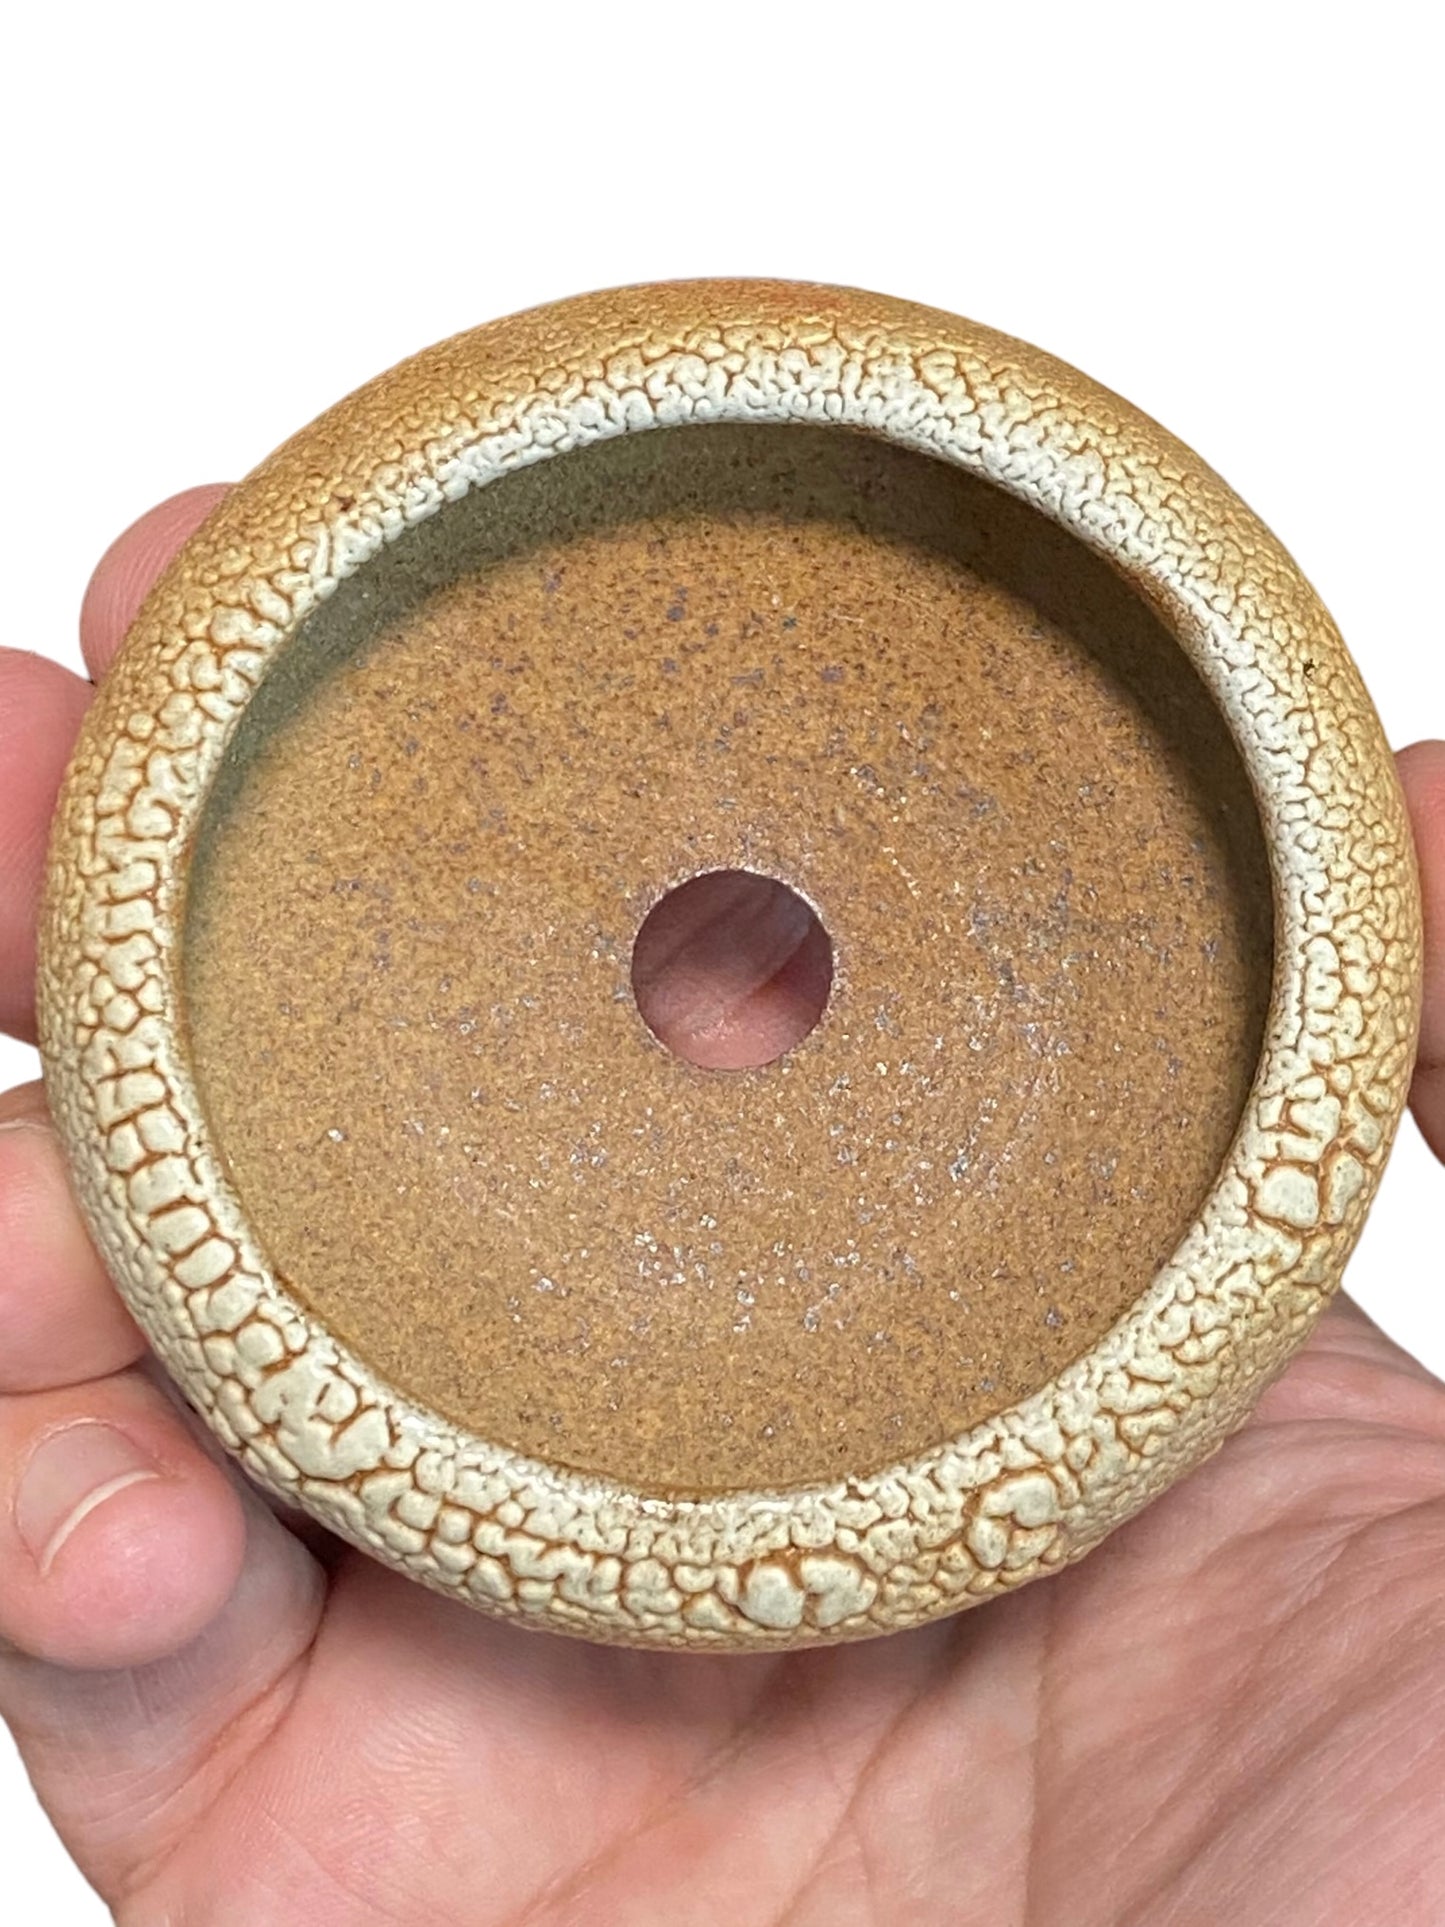 Japanese - Textured Glazed Bonsai or Accent Pot